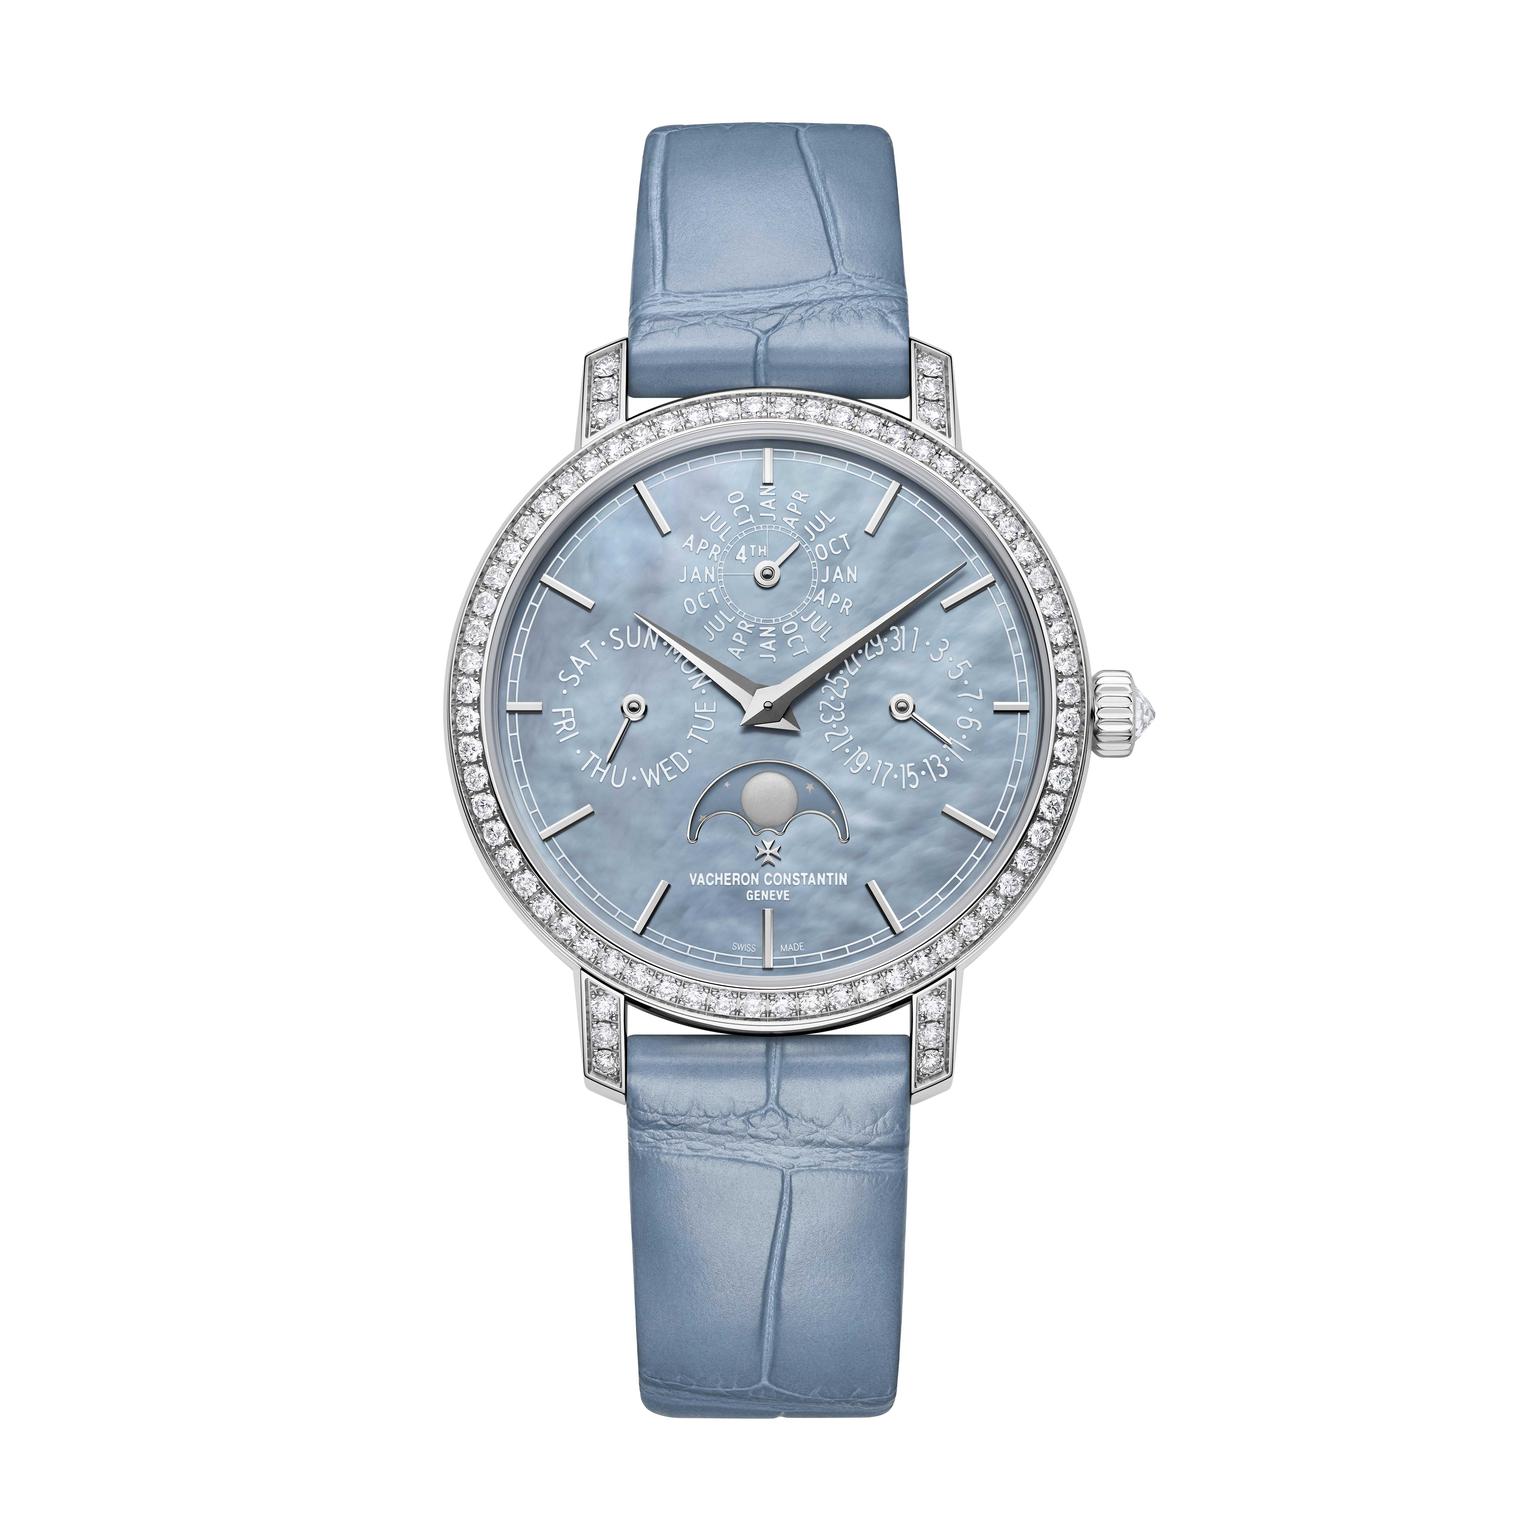 Vacheron Constantin Traditionnelle Perpetual Calendar Ultra-thin women’s watch blue dial